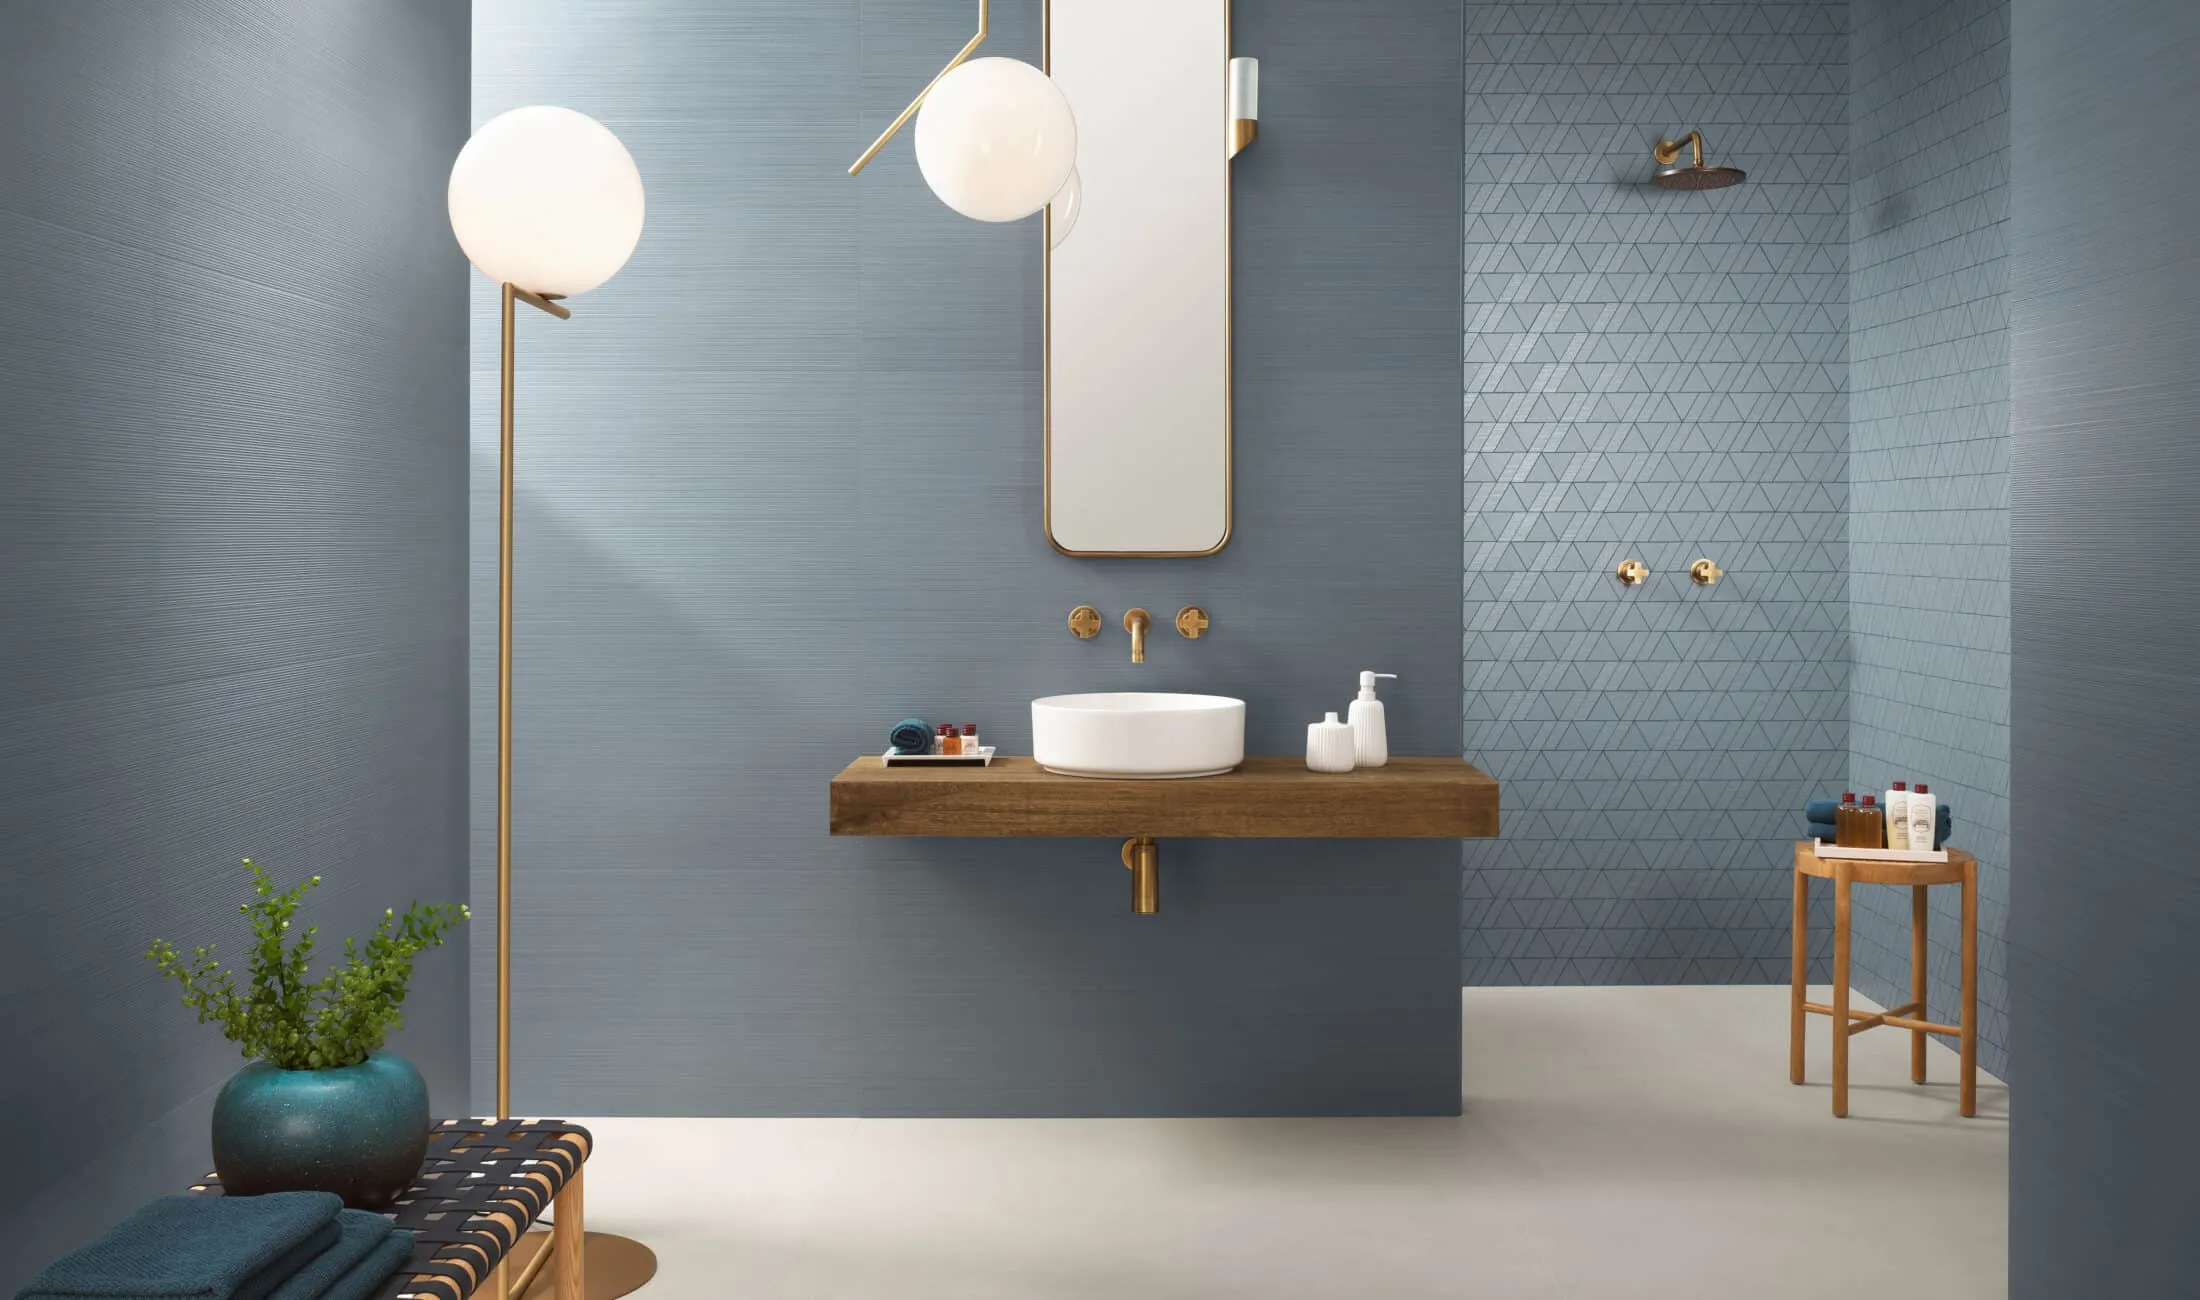 blue designer bathroom flooring tiles & tiling design with floor lamp and pendant lights